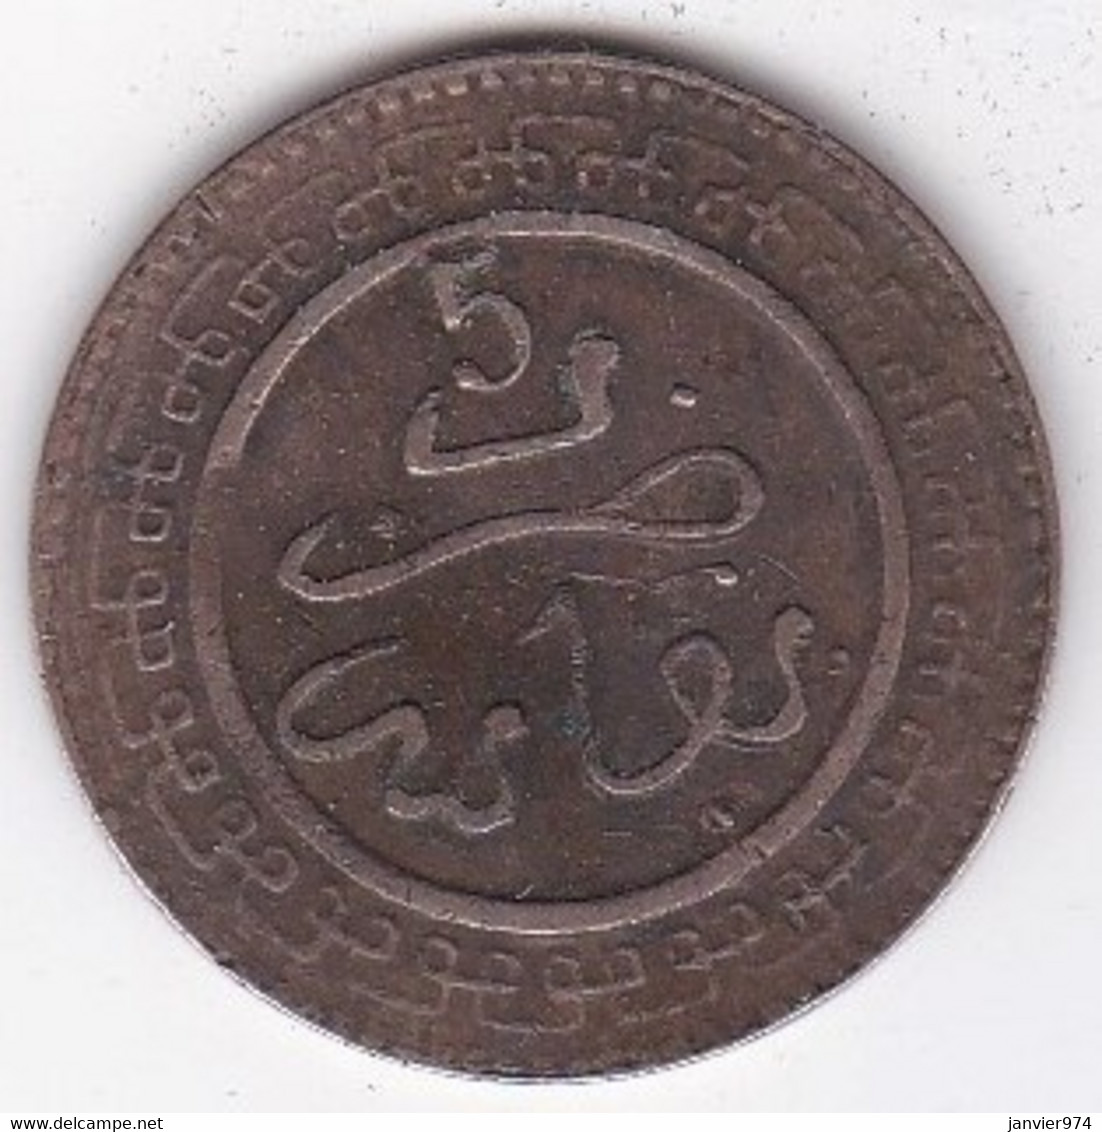 Protectorat Français. 5 Mazunas (Mouzounas) HA 1320 - 1902 FEZ. Frappe Médaille. Bronze, Lec# 57 - Maroc